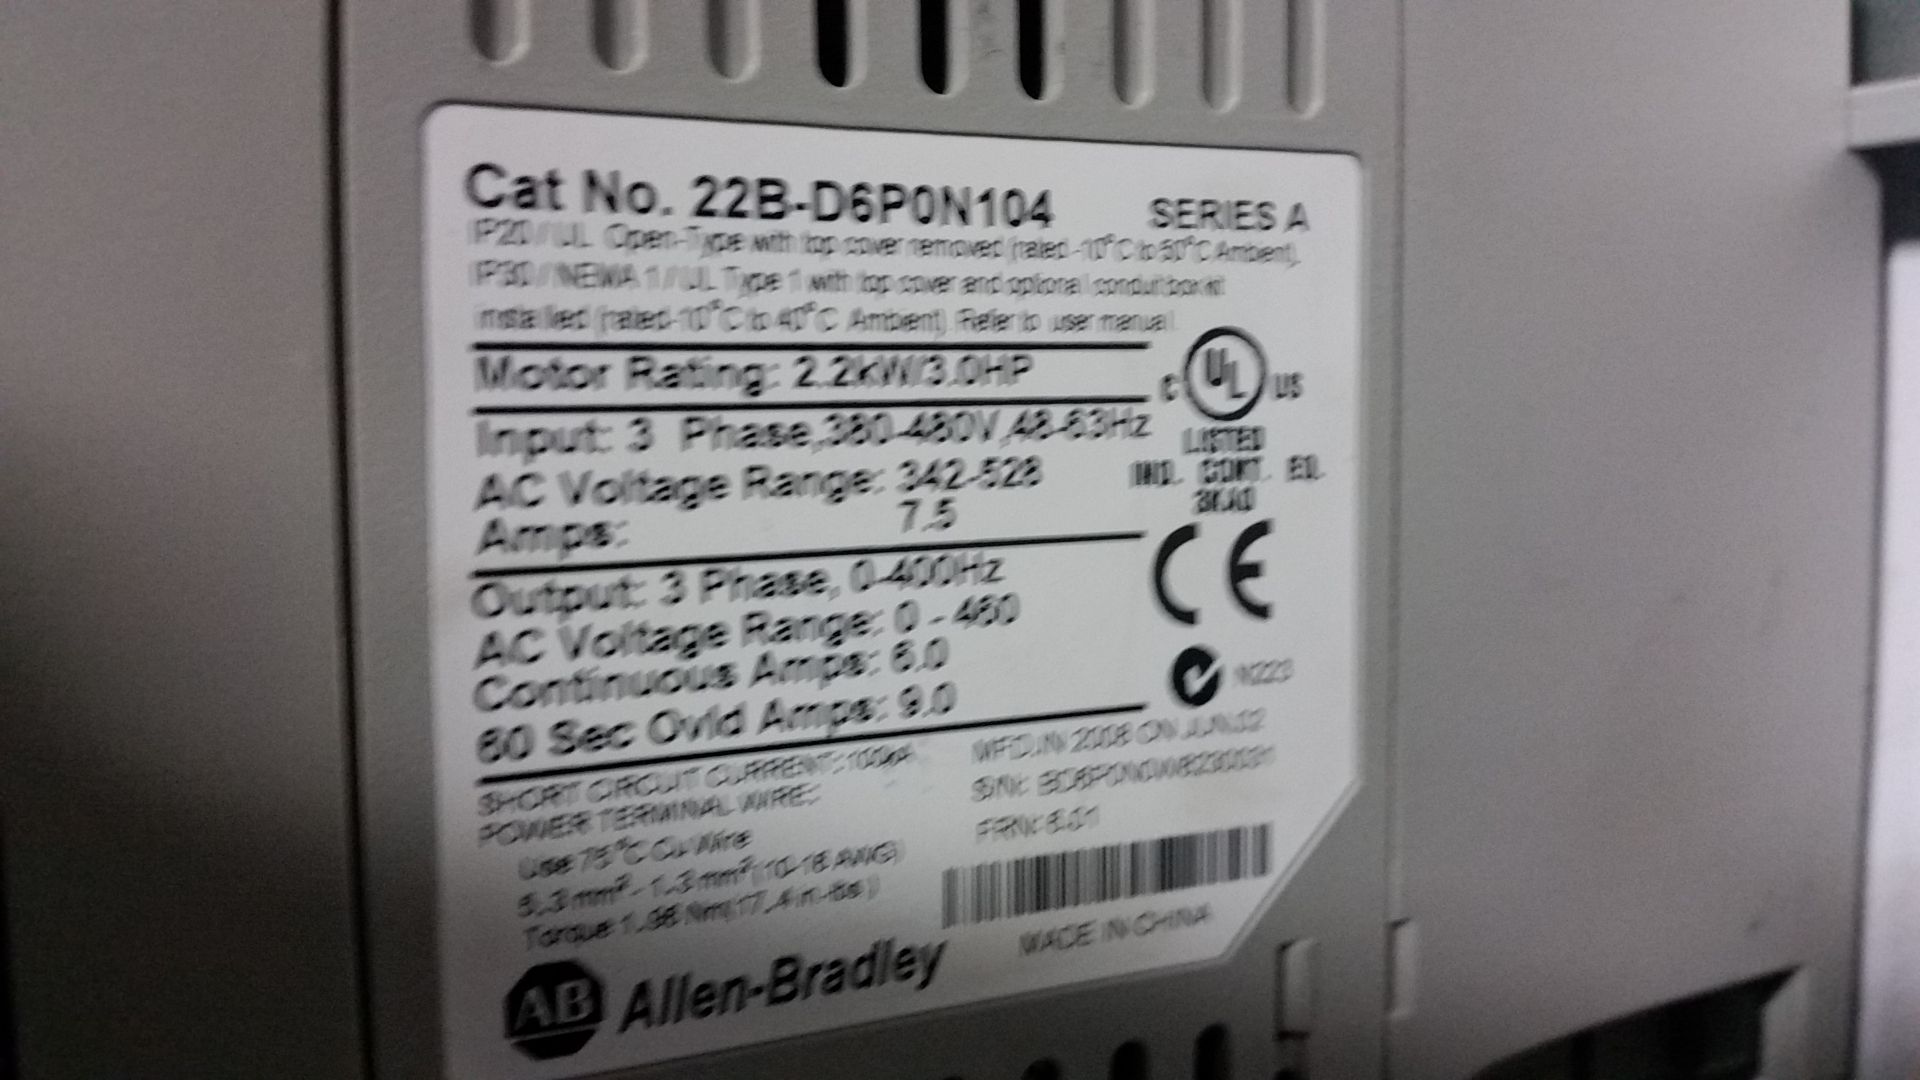 Load PLC Electrical Panel ,480v packaging conveyor, Allen Bradley 22B-D6P0N104 , Allen bradley Power - Image 3 of 26